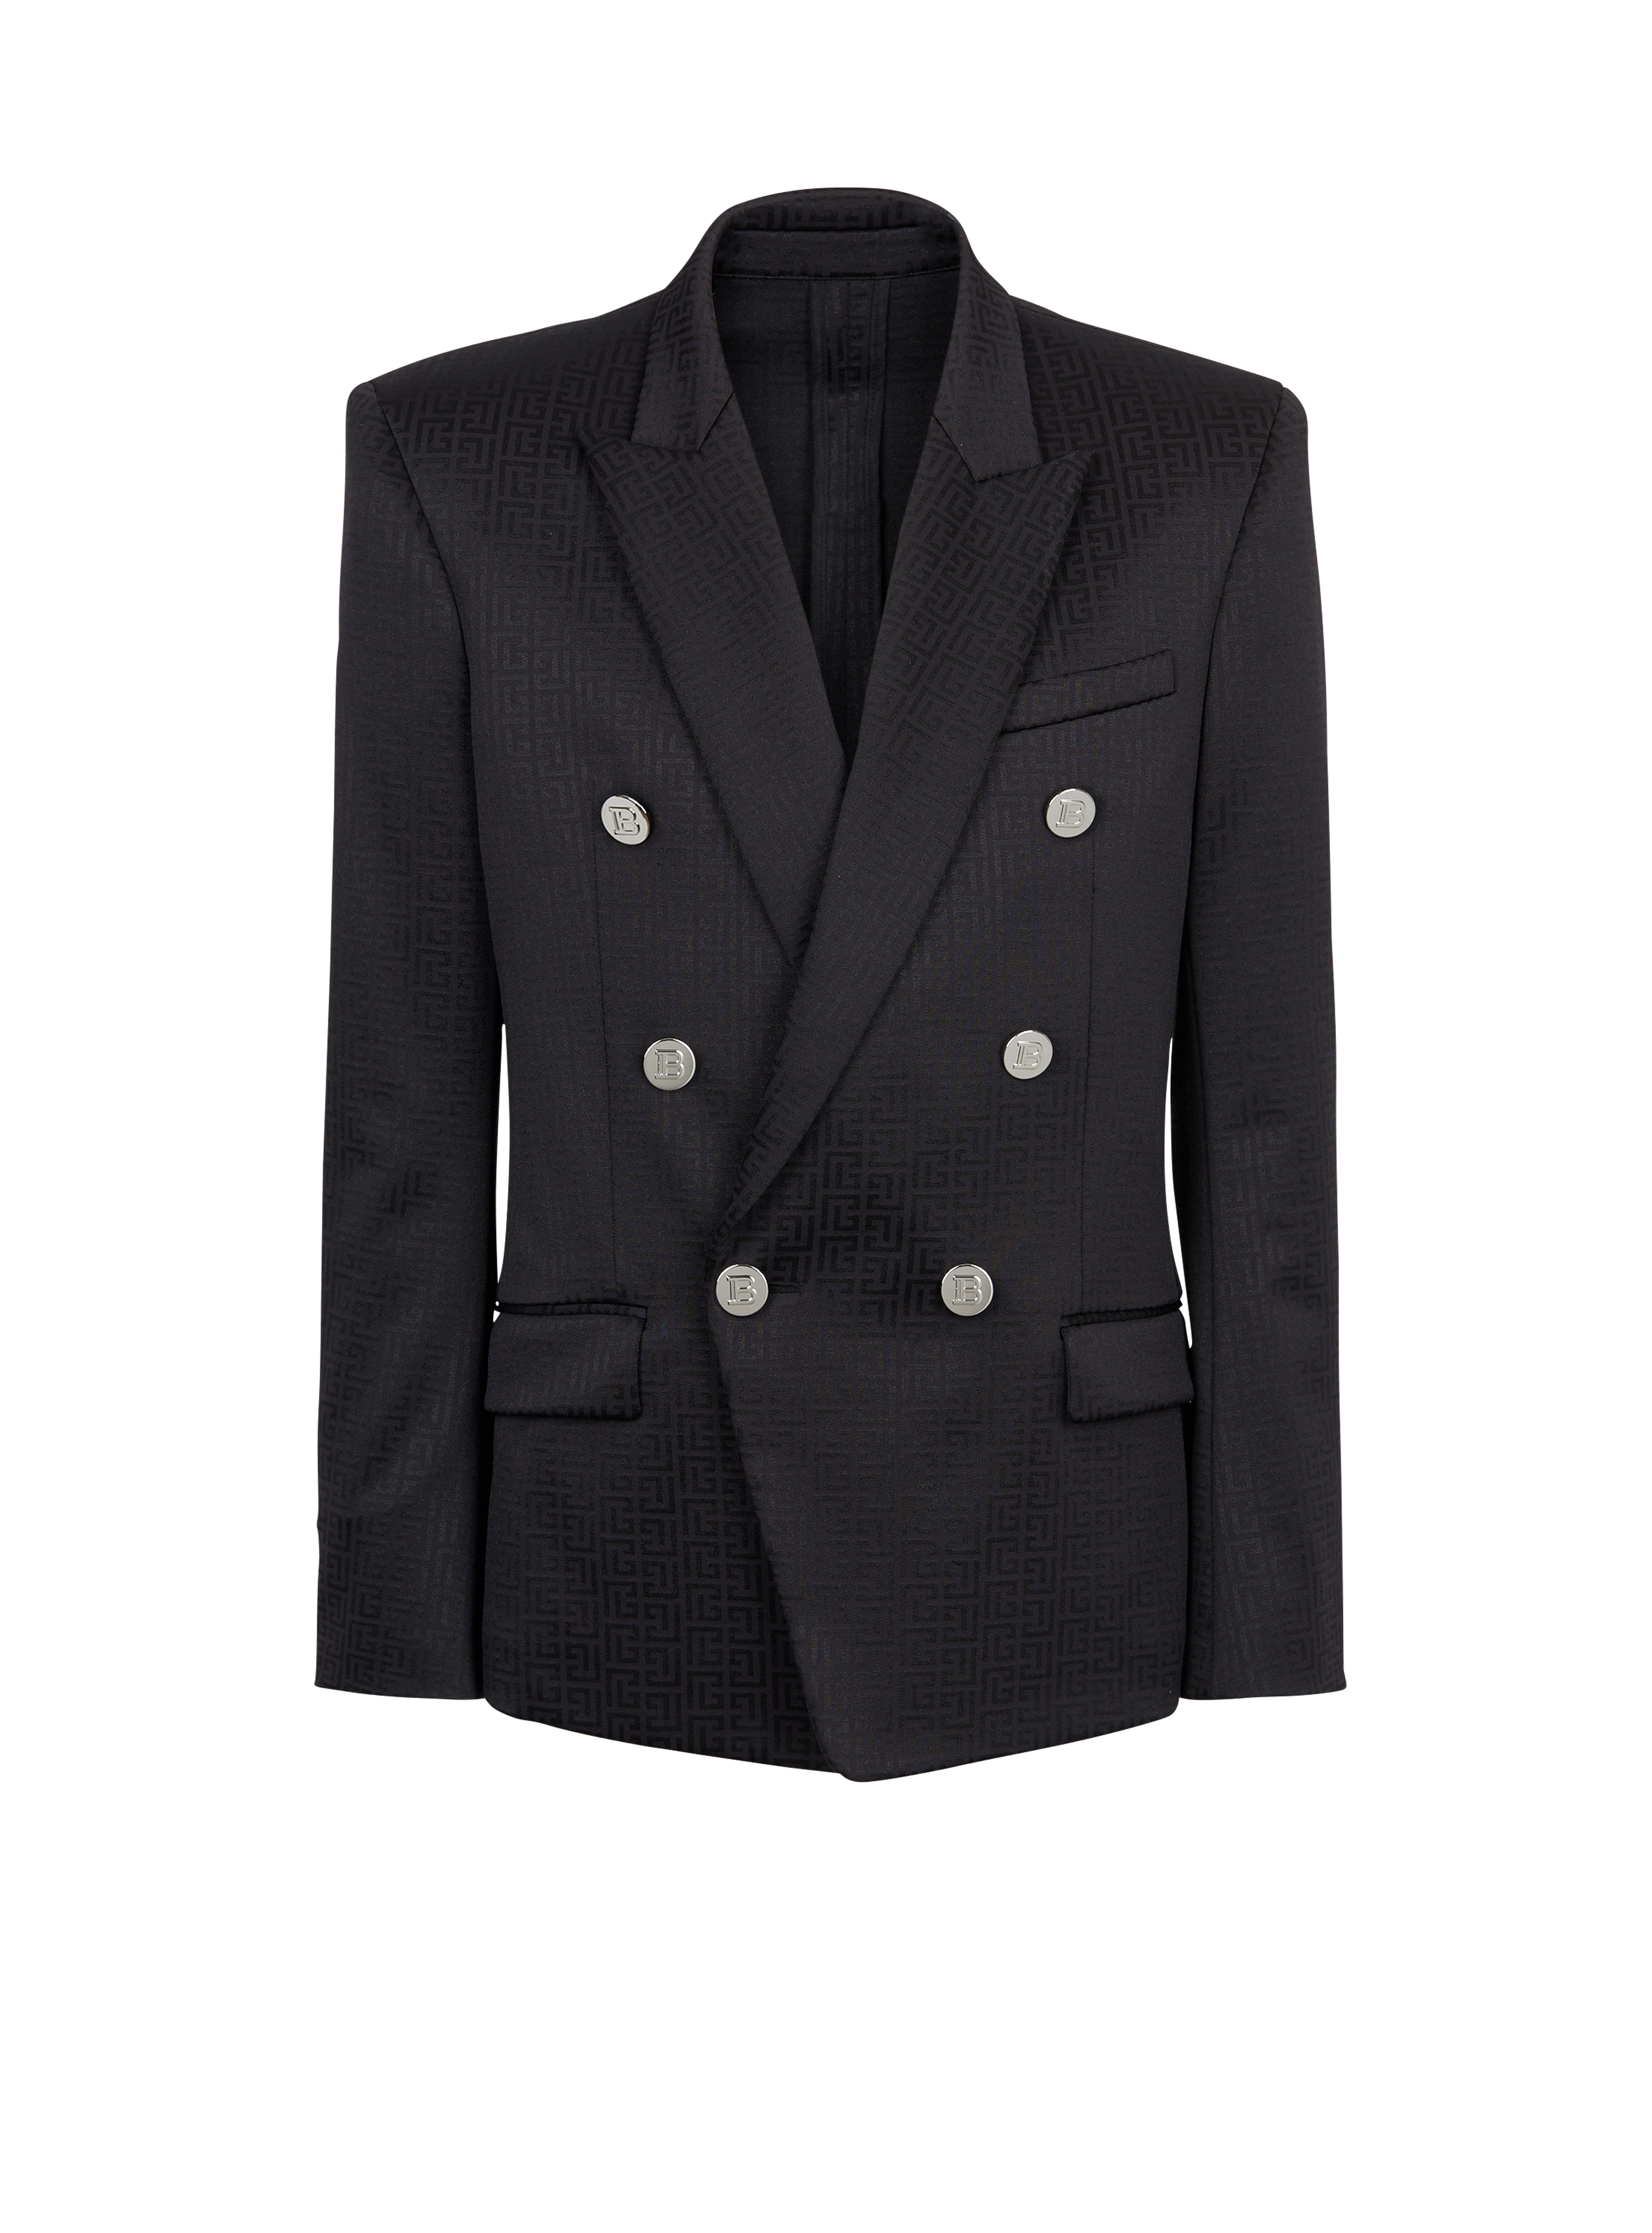 Jersey double-breasted blazer with Balmain monogram print, black